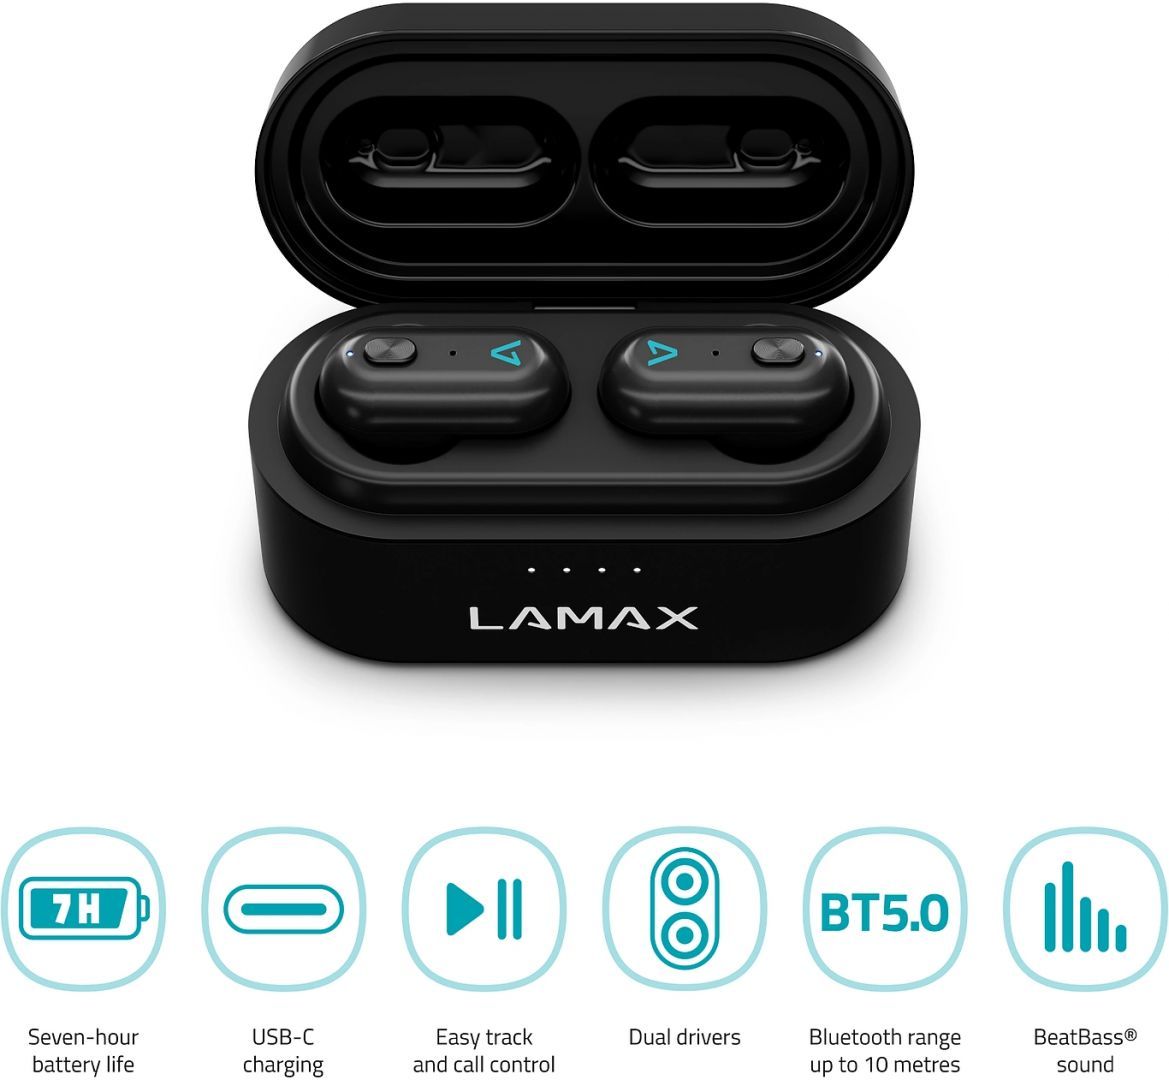 Lamax Duals1 Headset Black